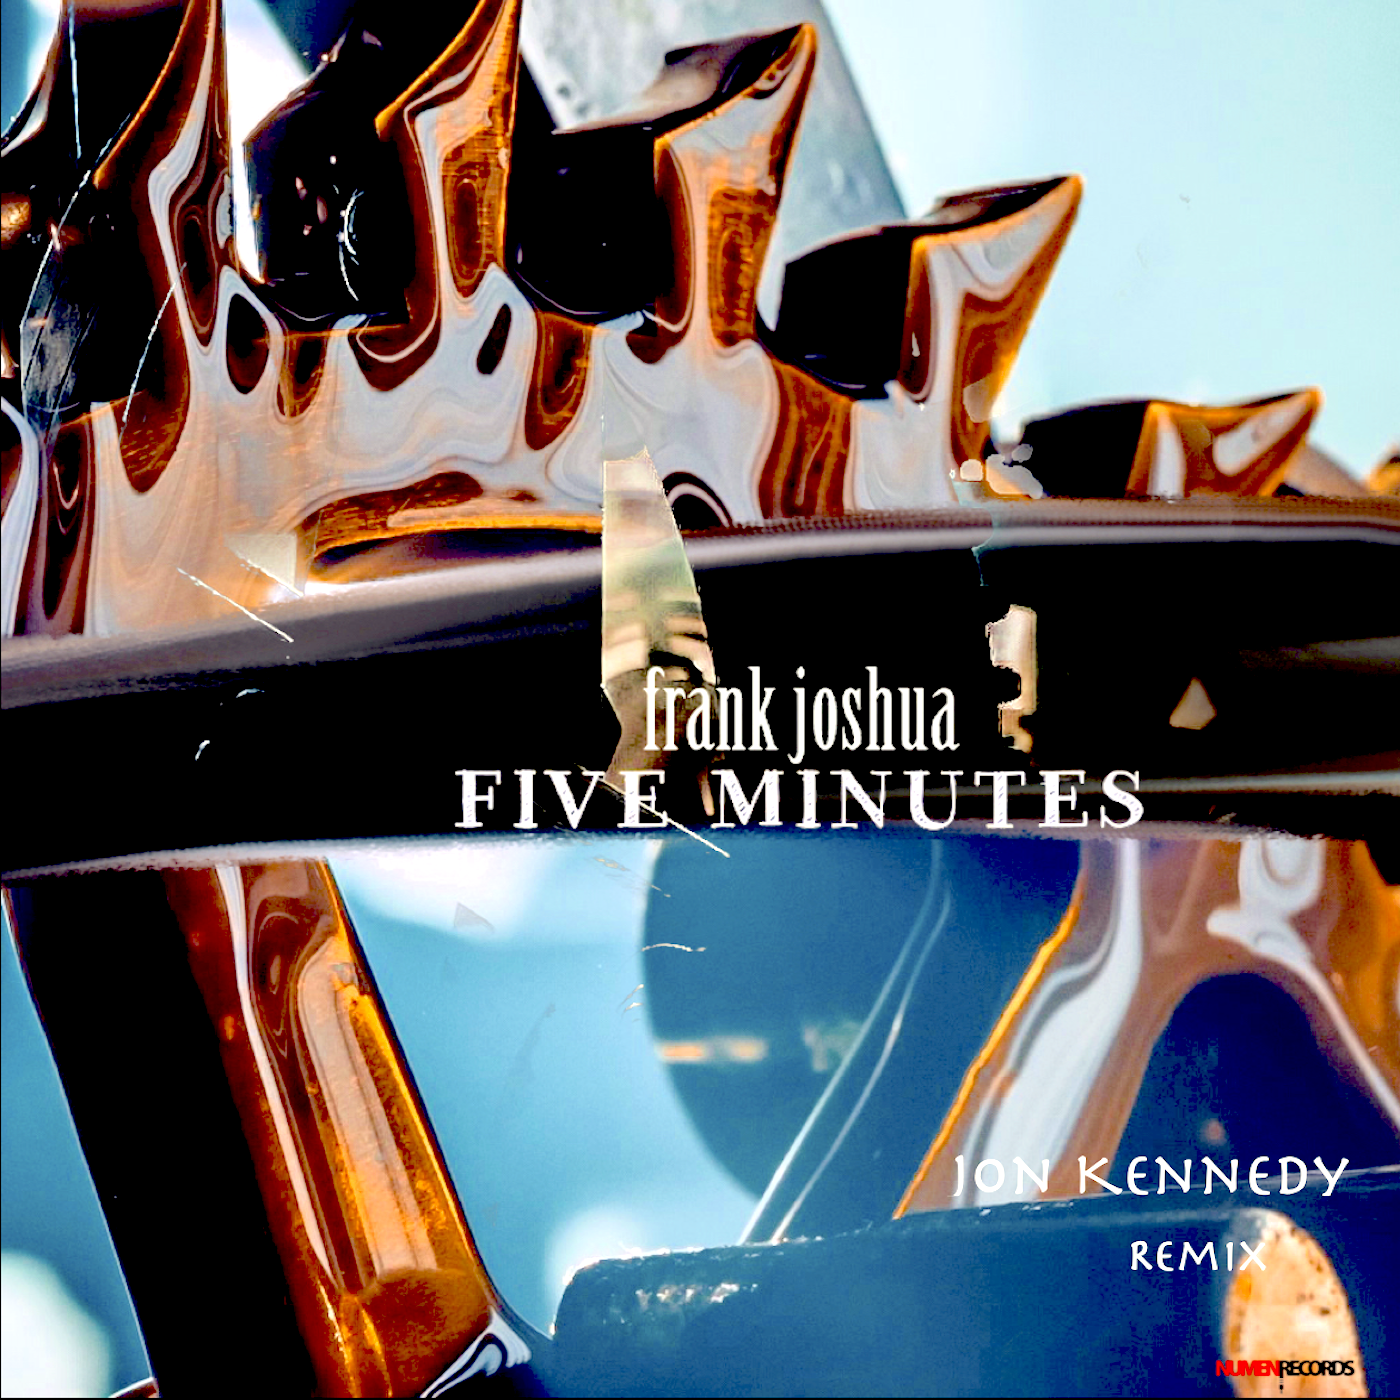 Frank Joshua “Five Minutes (Jon Kennedy remix)”